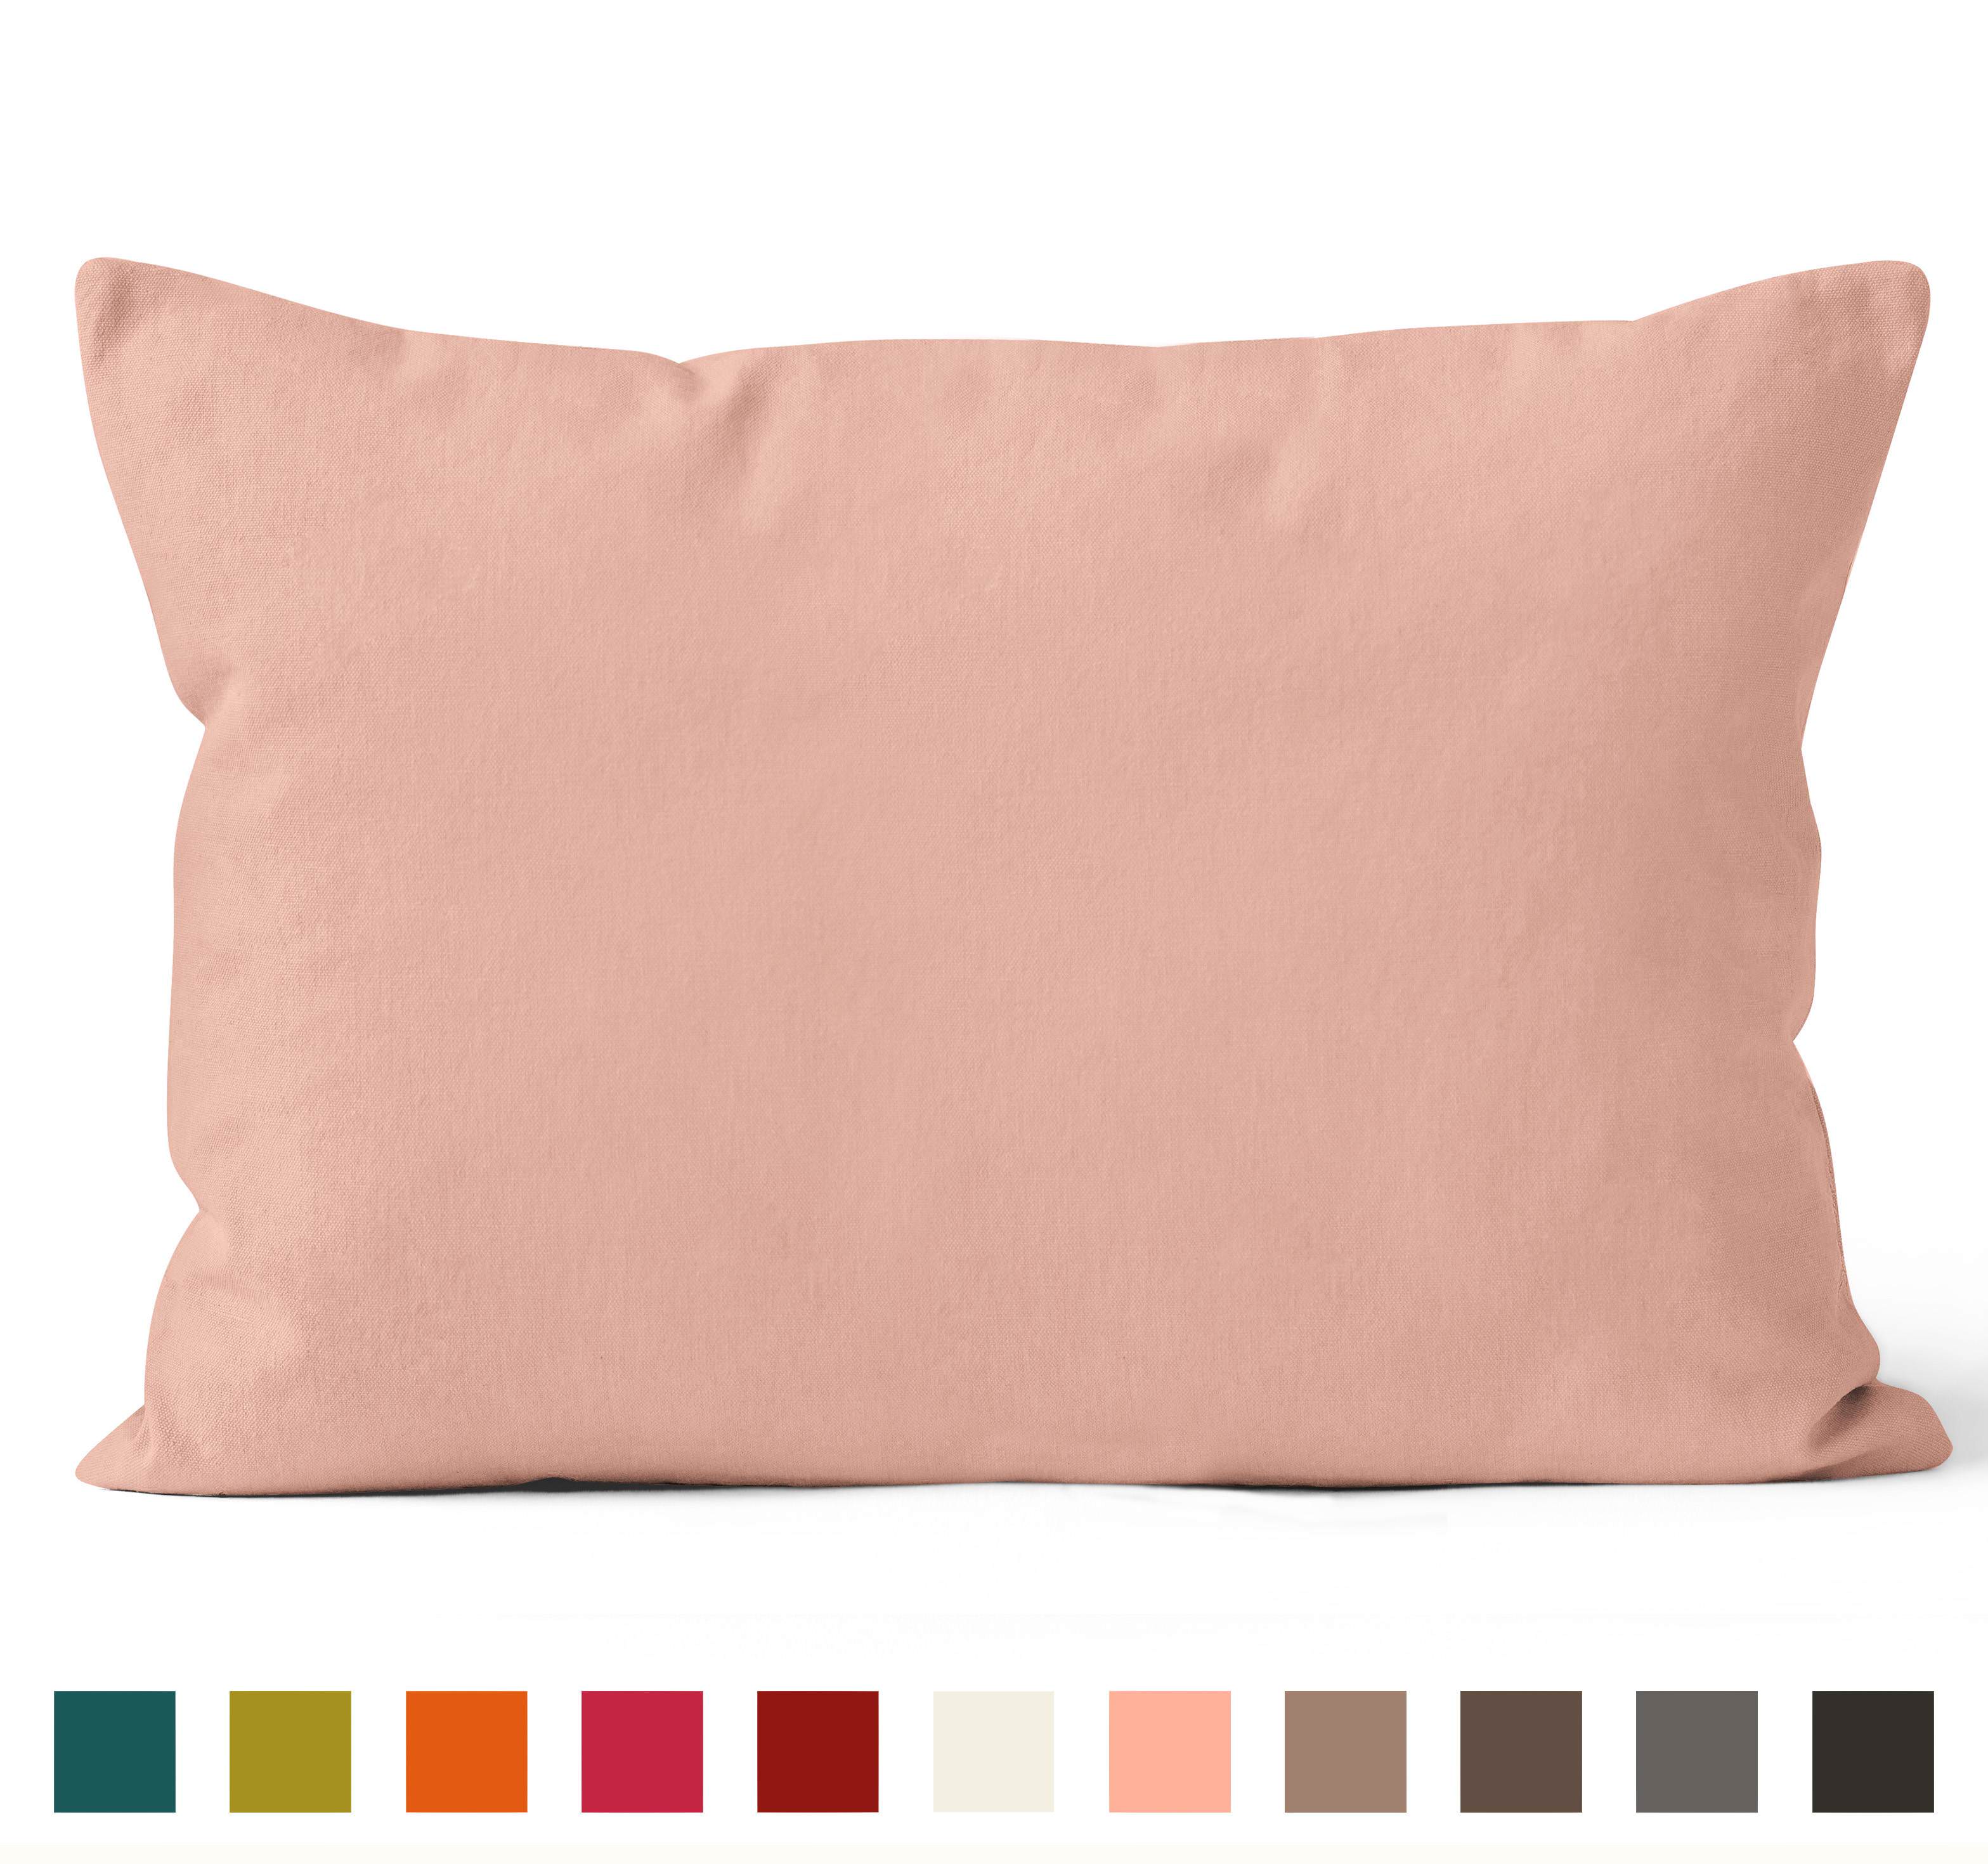 Encasa Homes Dyed Cotton Canvas Filled Cushion - 30x50 cm, Powder Pink